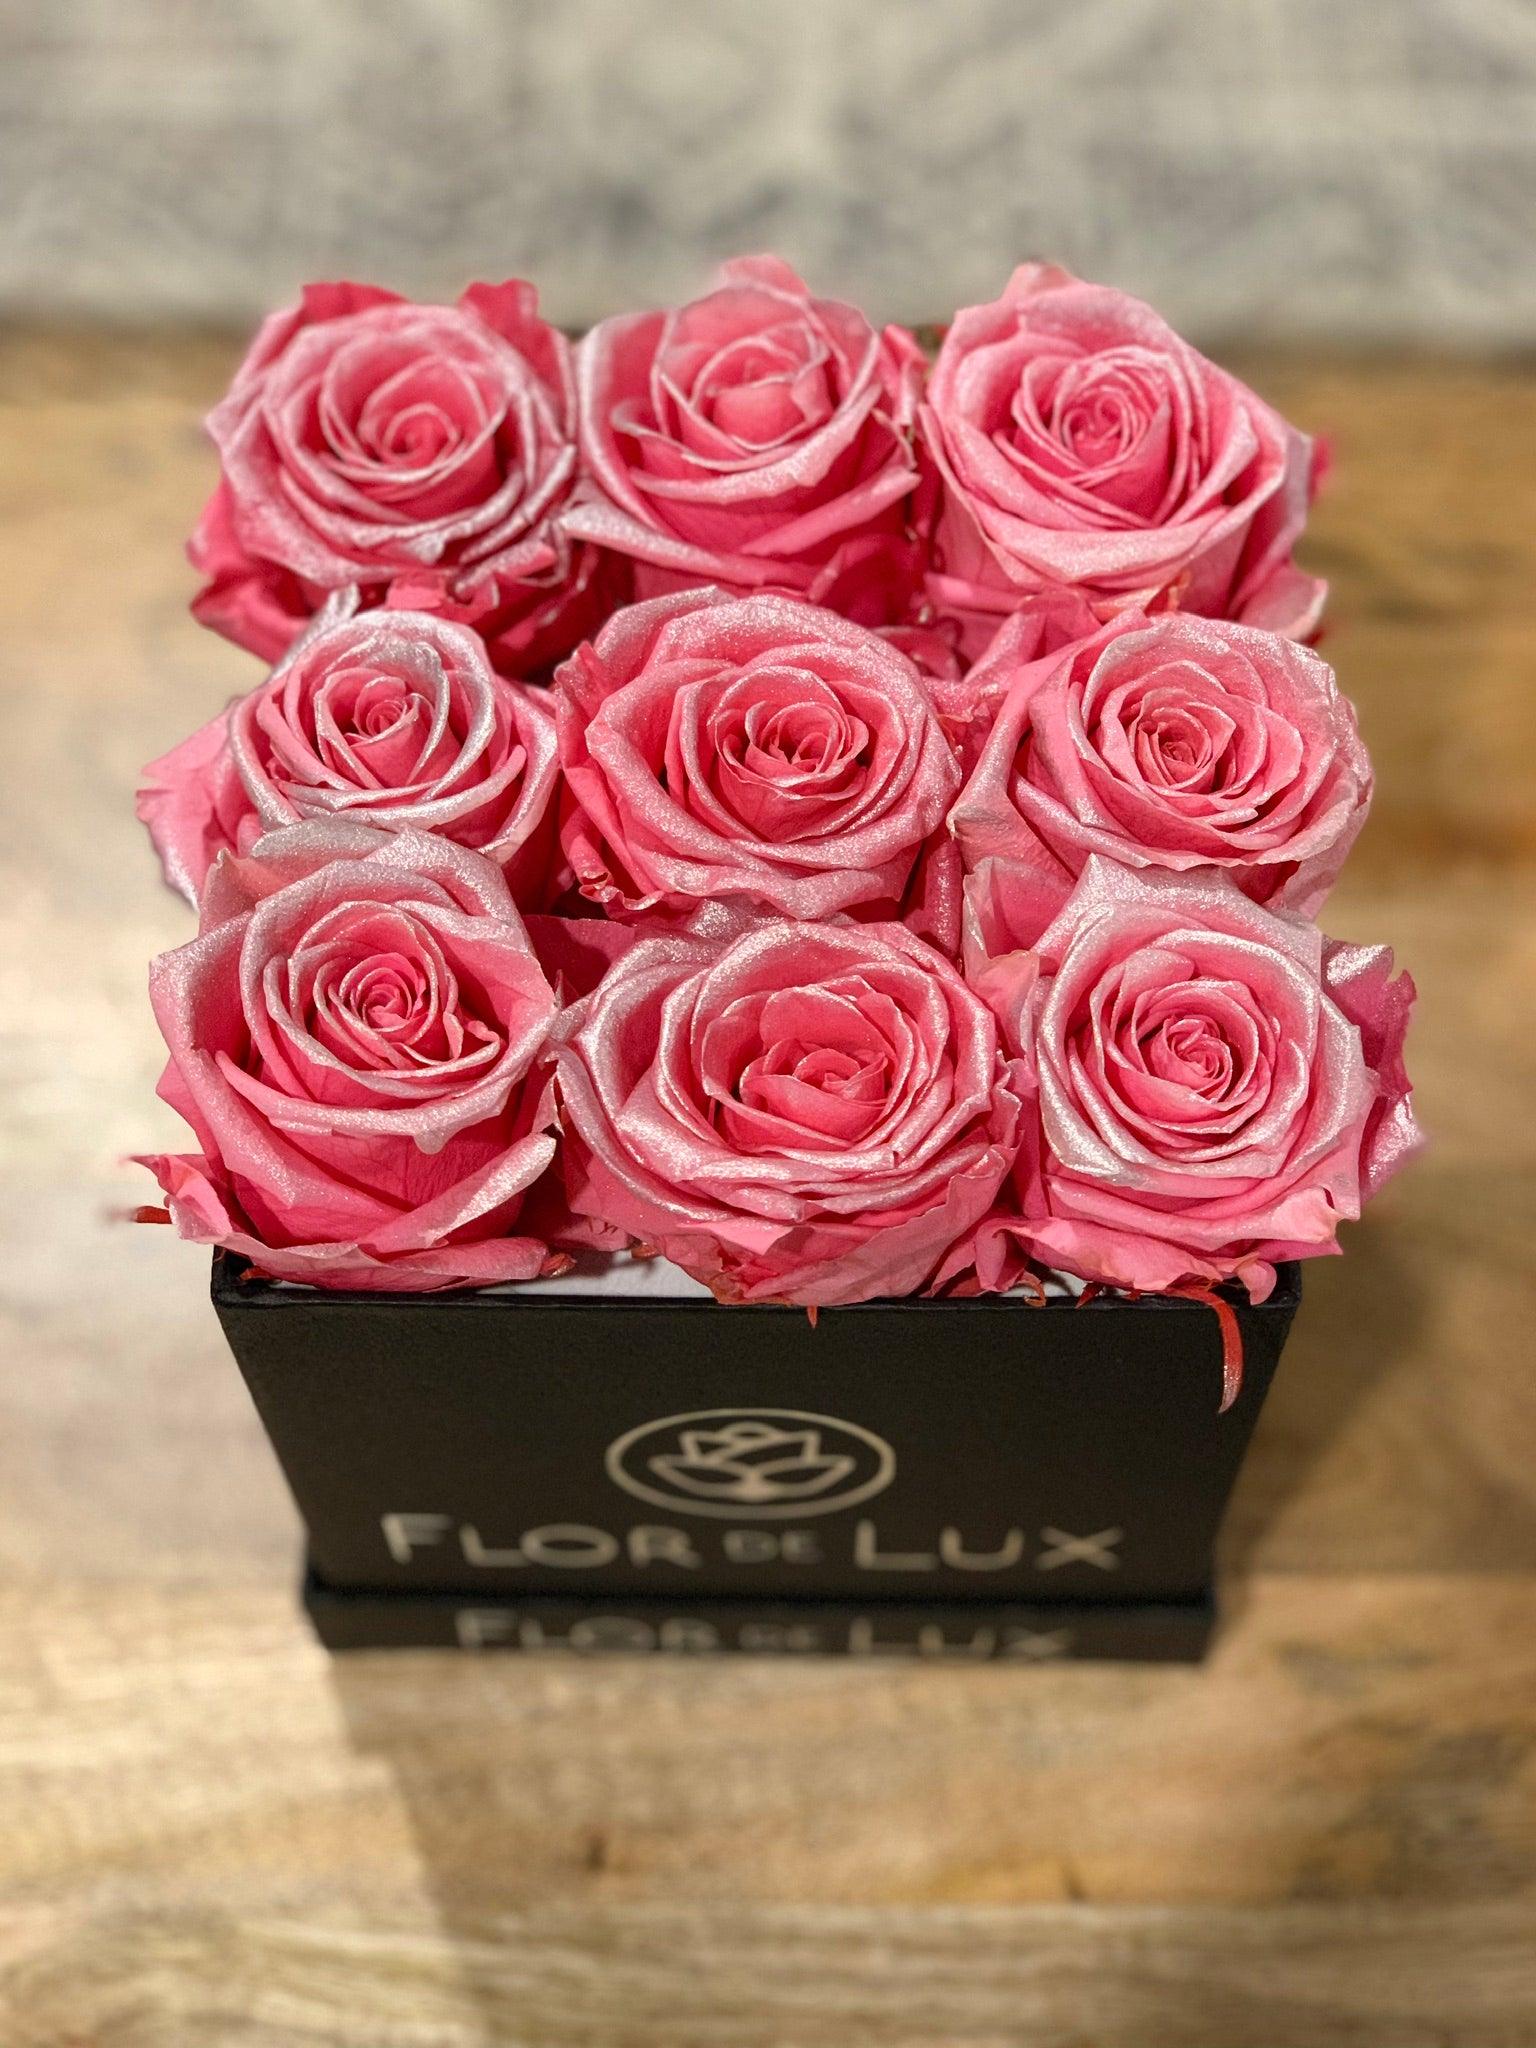 Small Black Square Box - Preserved Roses